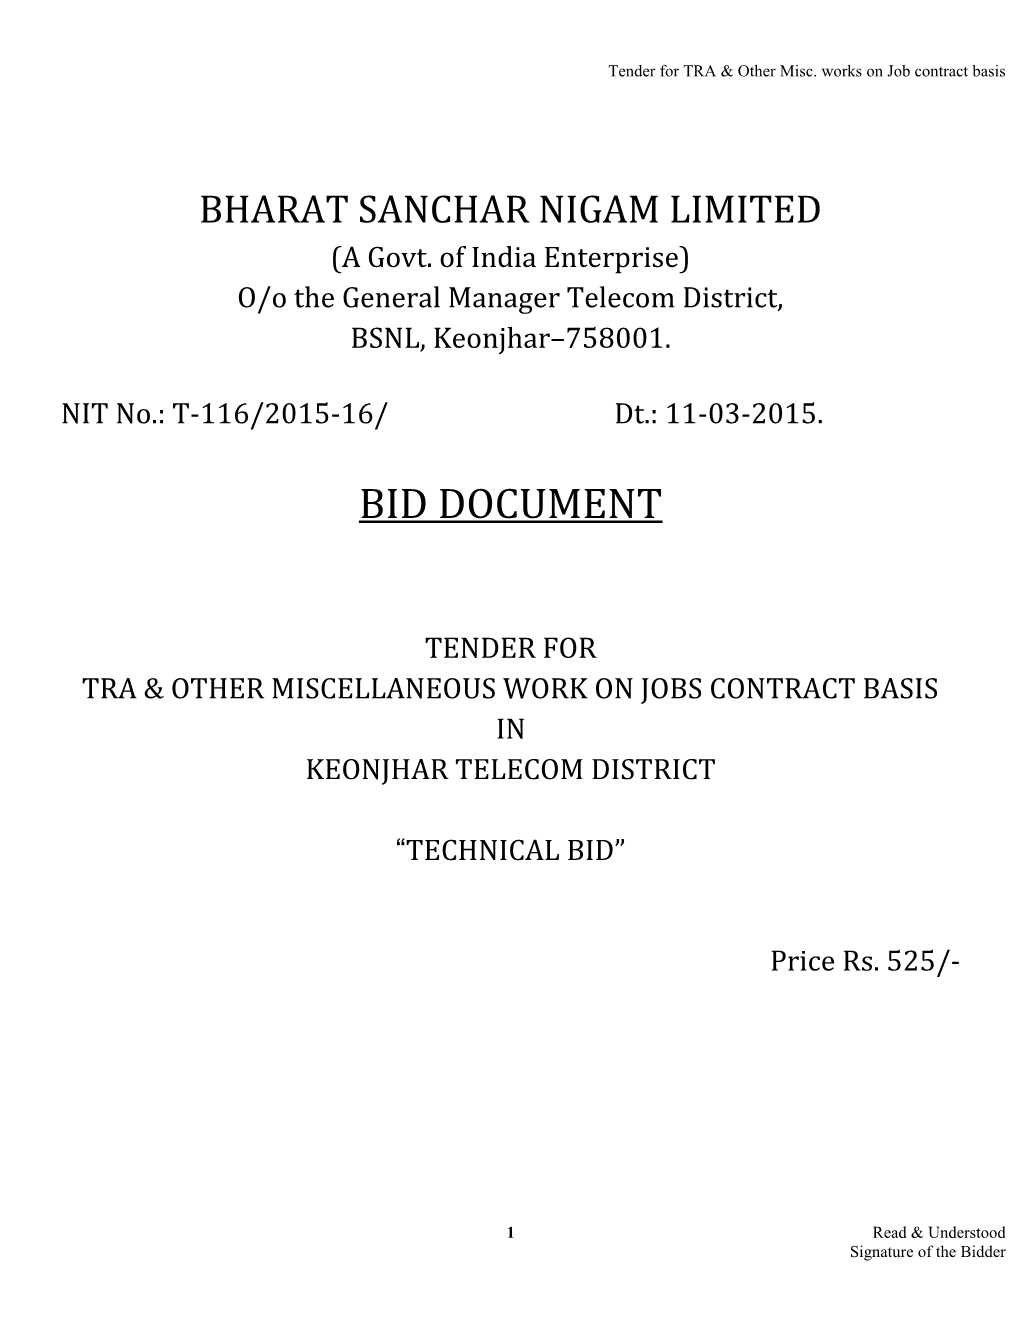 Bharat Sanchar Nigam Limited s18